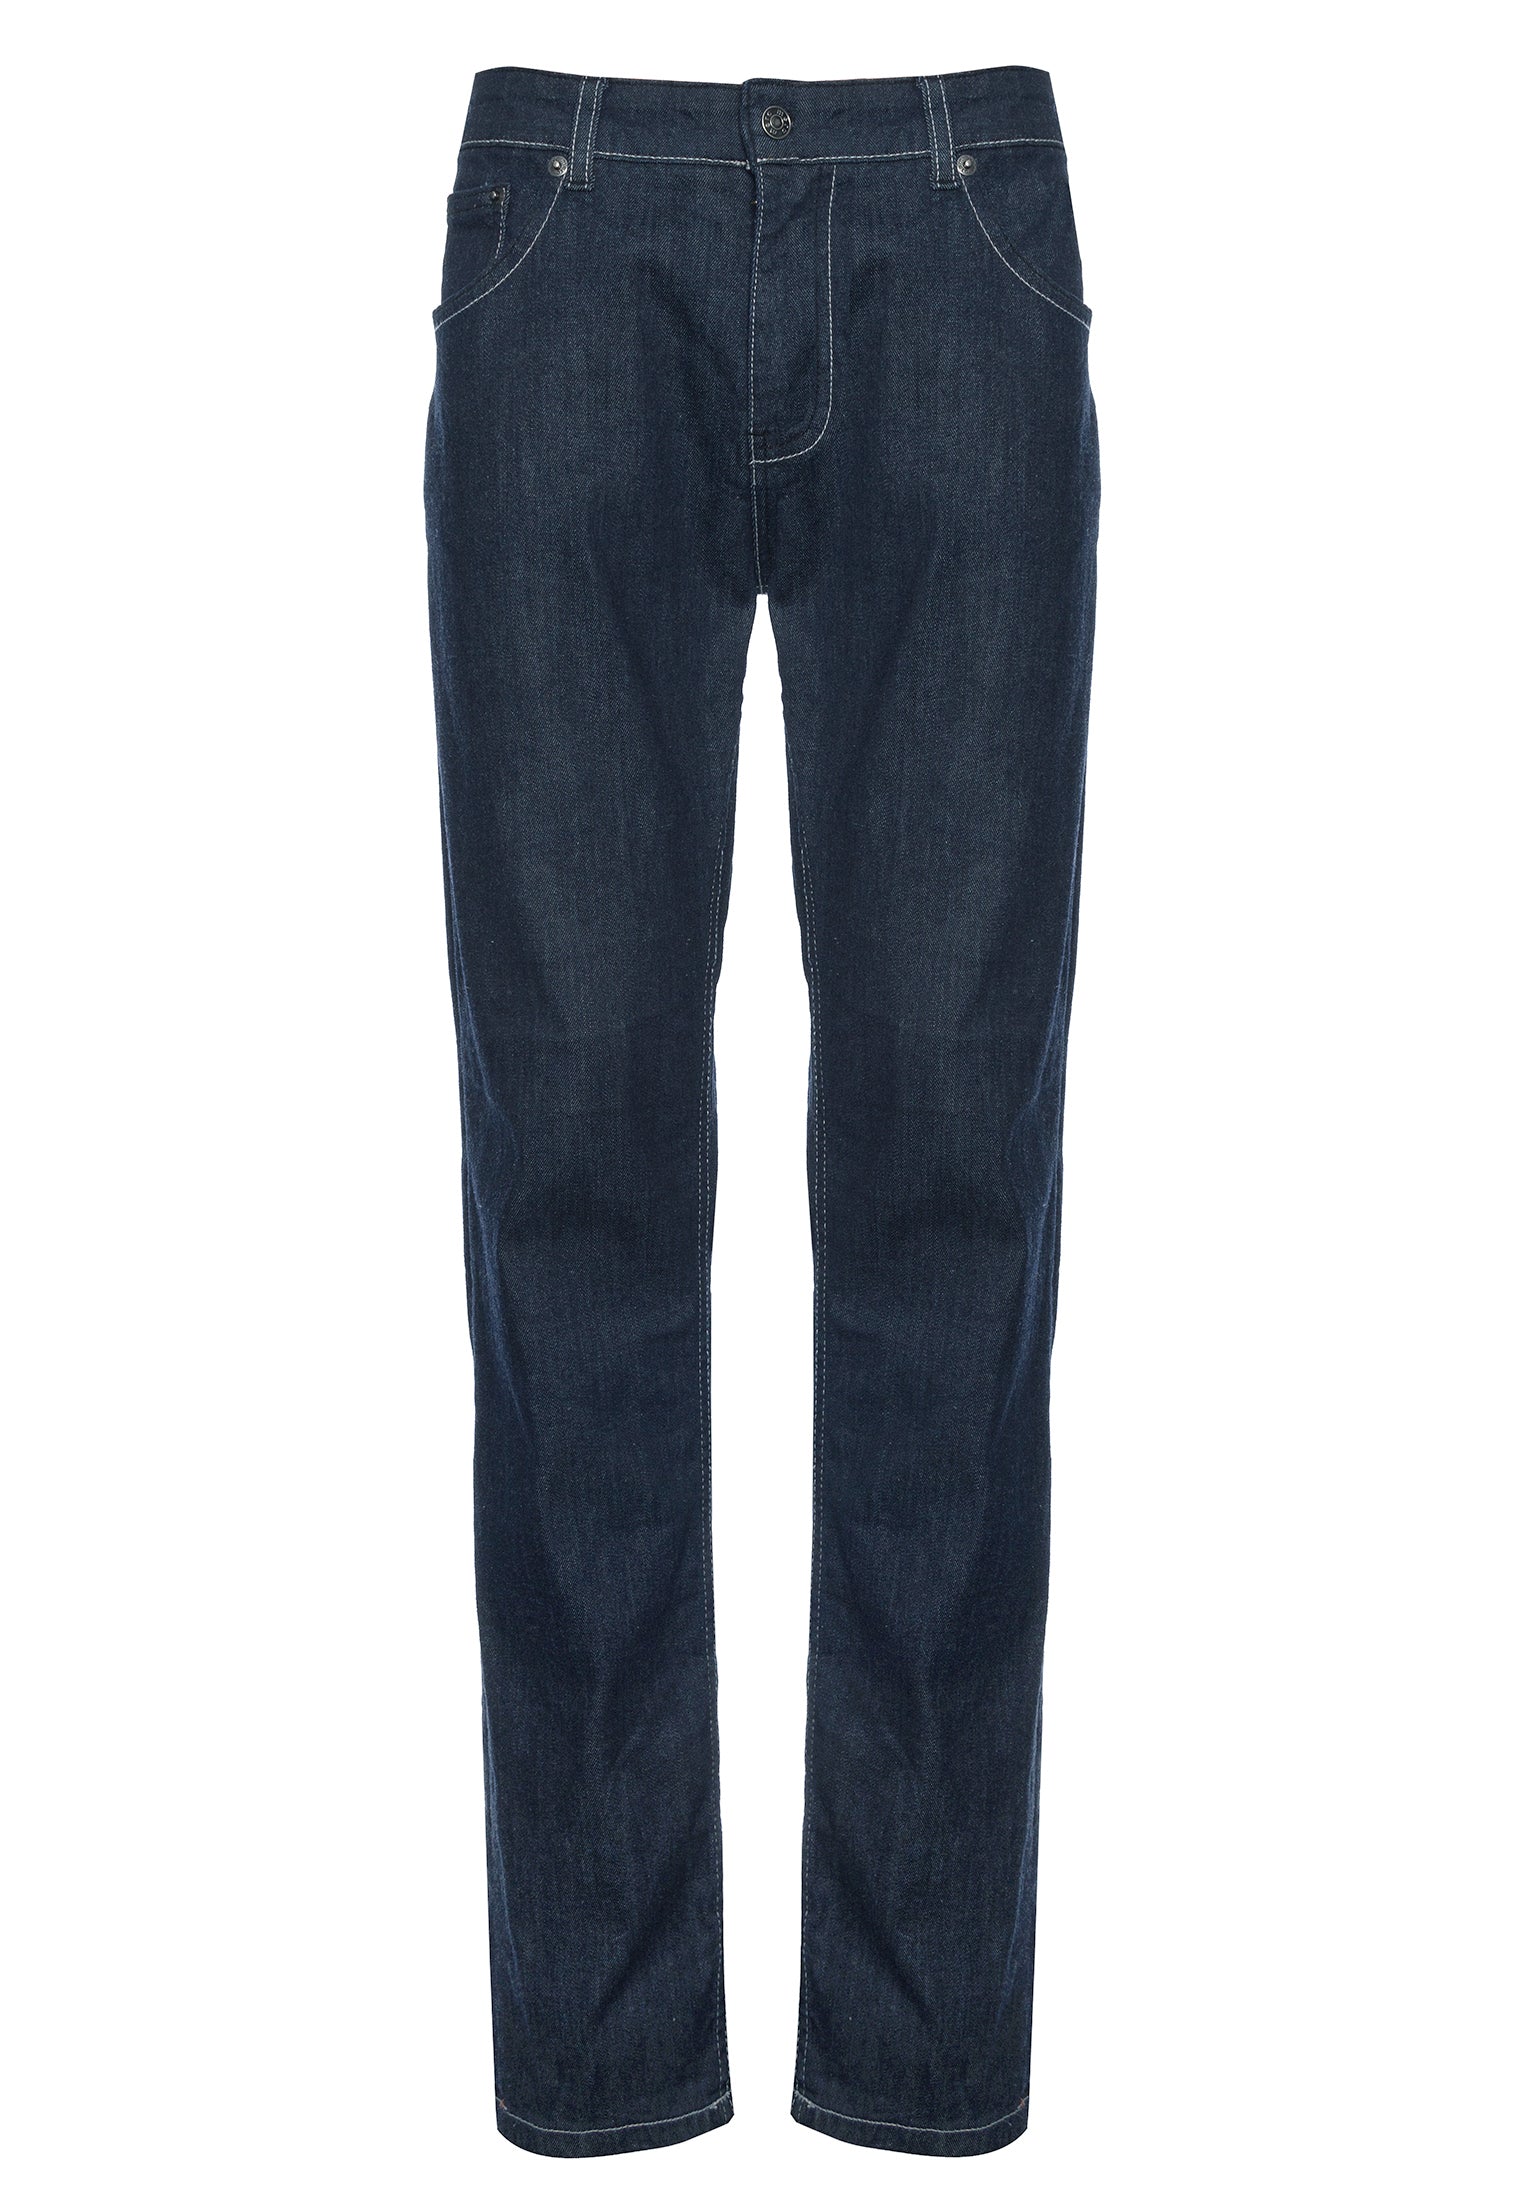 Ashville Denim Jeans - Merc London